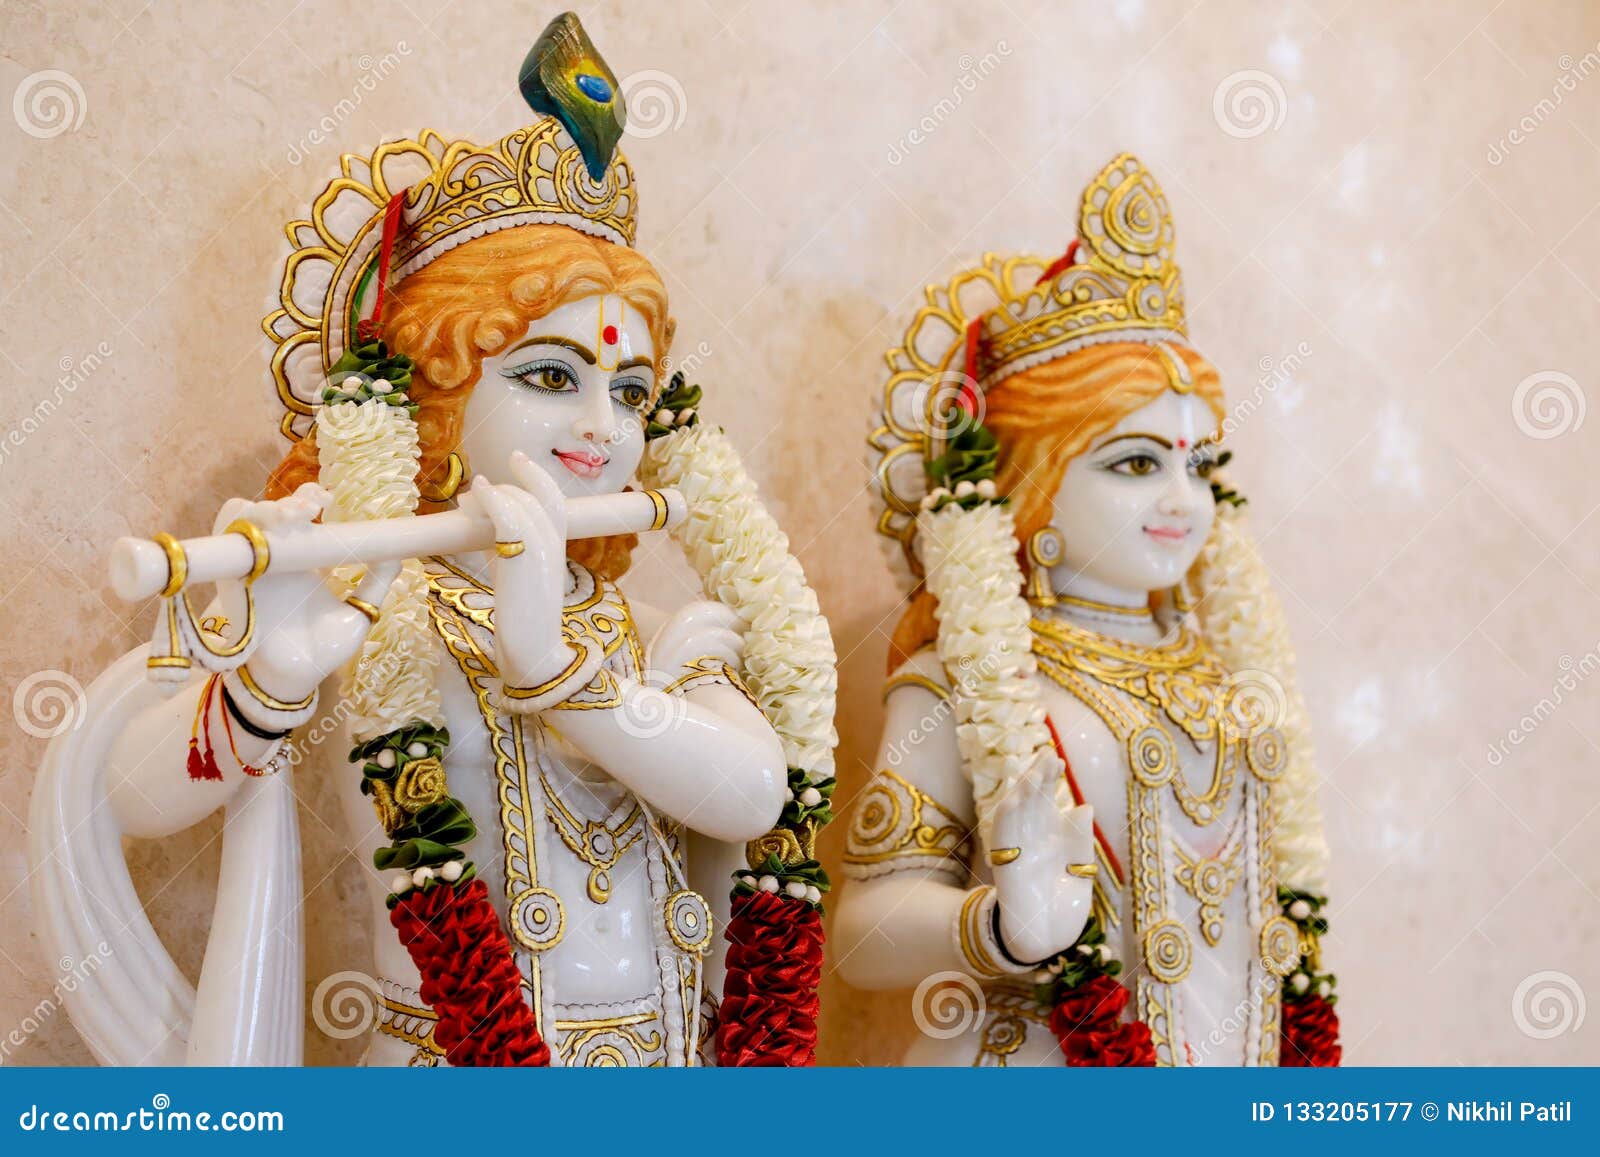 Lord Krishna and Radha stock image. Image of krishna - 133205177